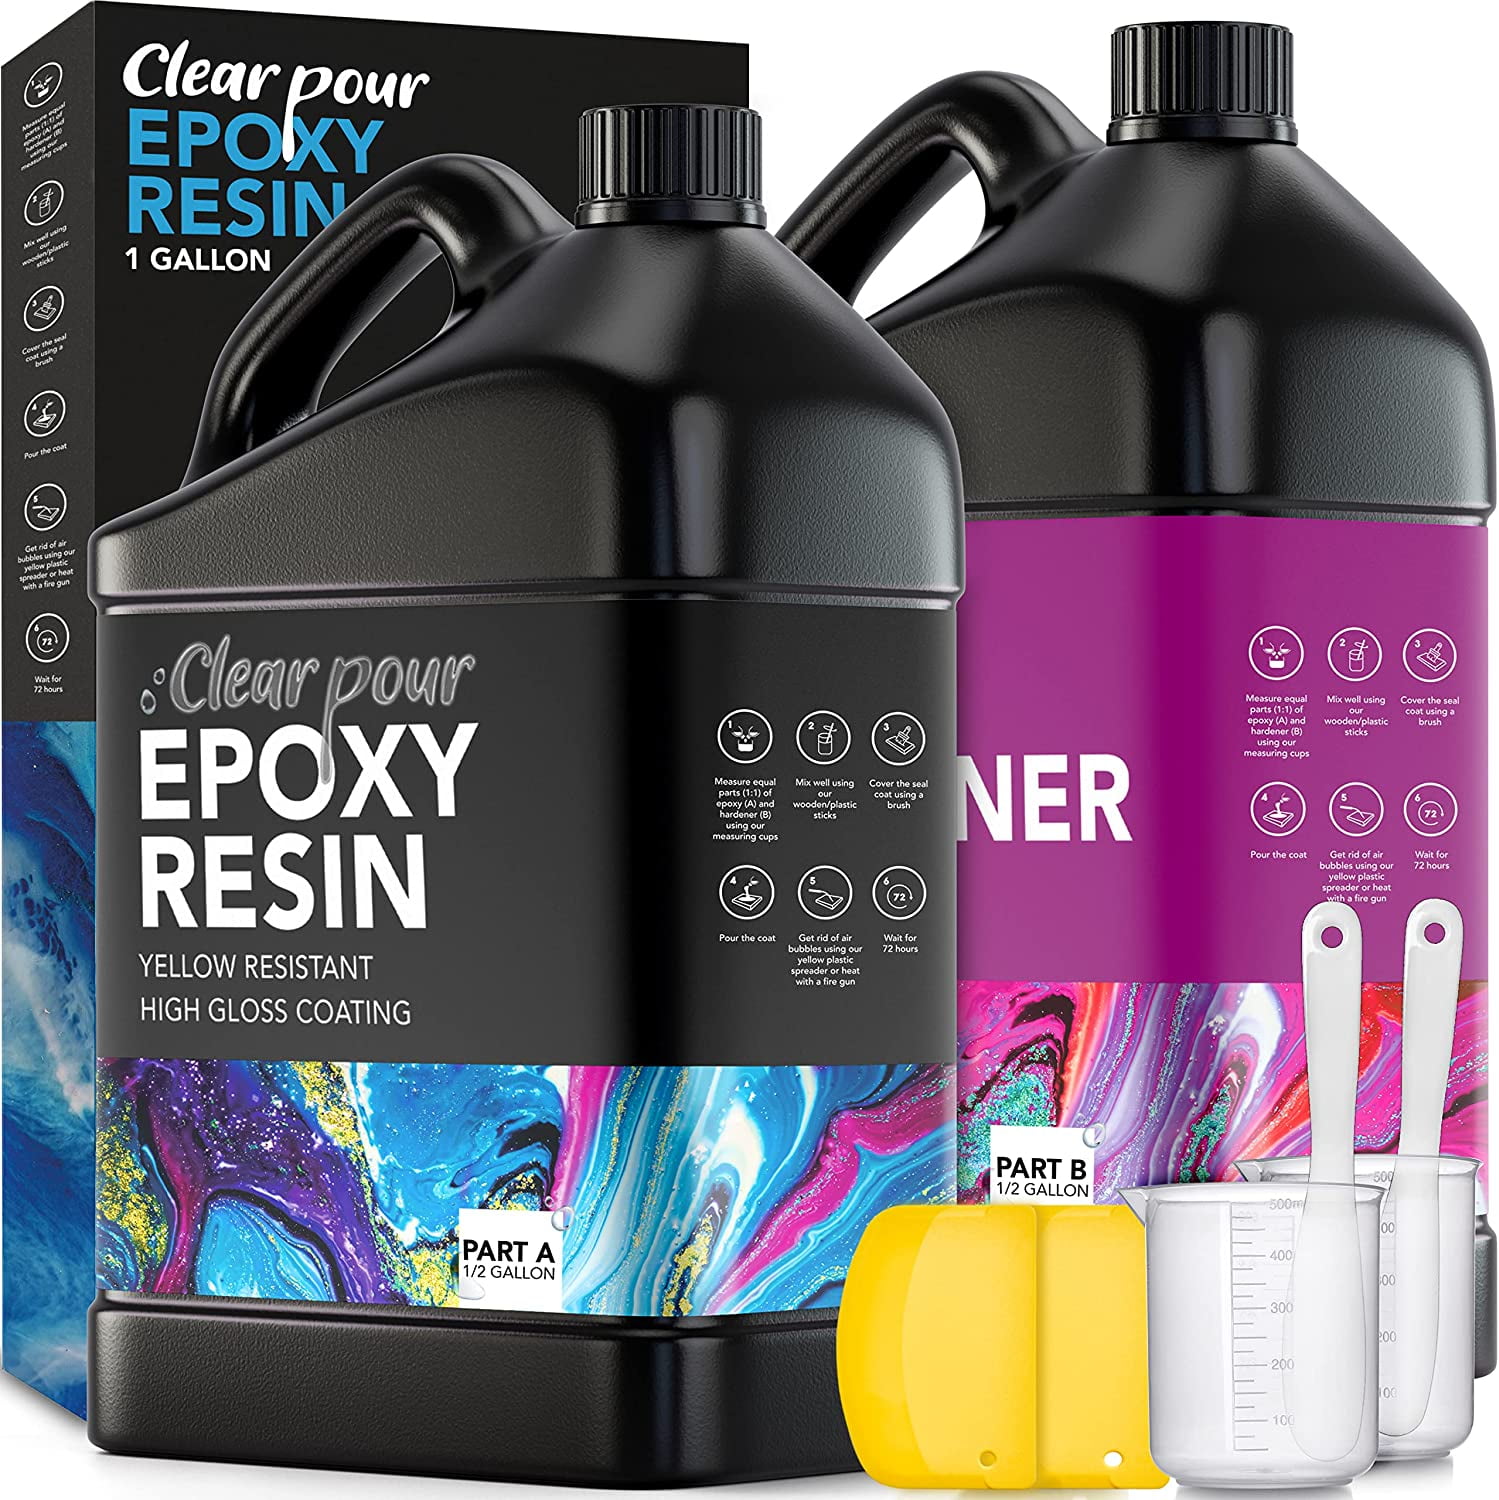 SUPERCLEAR® Coat Epoxy Resin Kit, 2 Gallon, Liquid Glass® Epoxy, Art Resin,  S